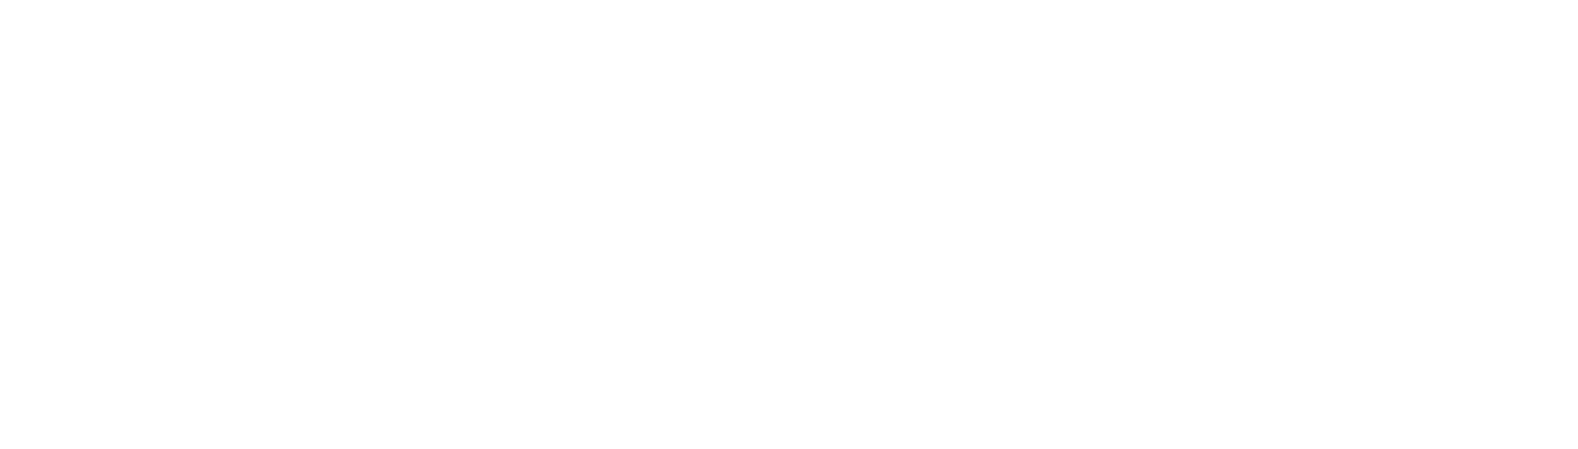 Boardwalk Real Estate Investment Trust logo grand pour les fonds sombres (PNG transparent)